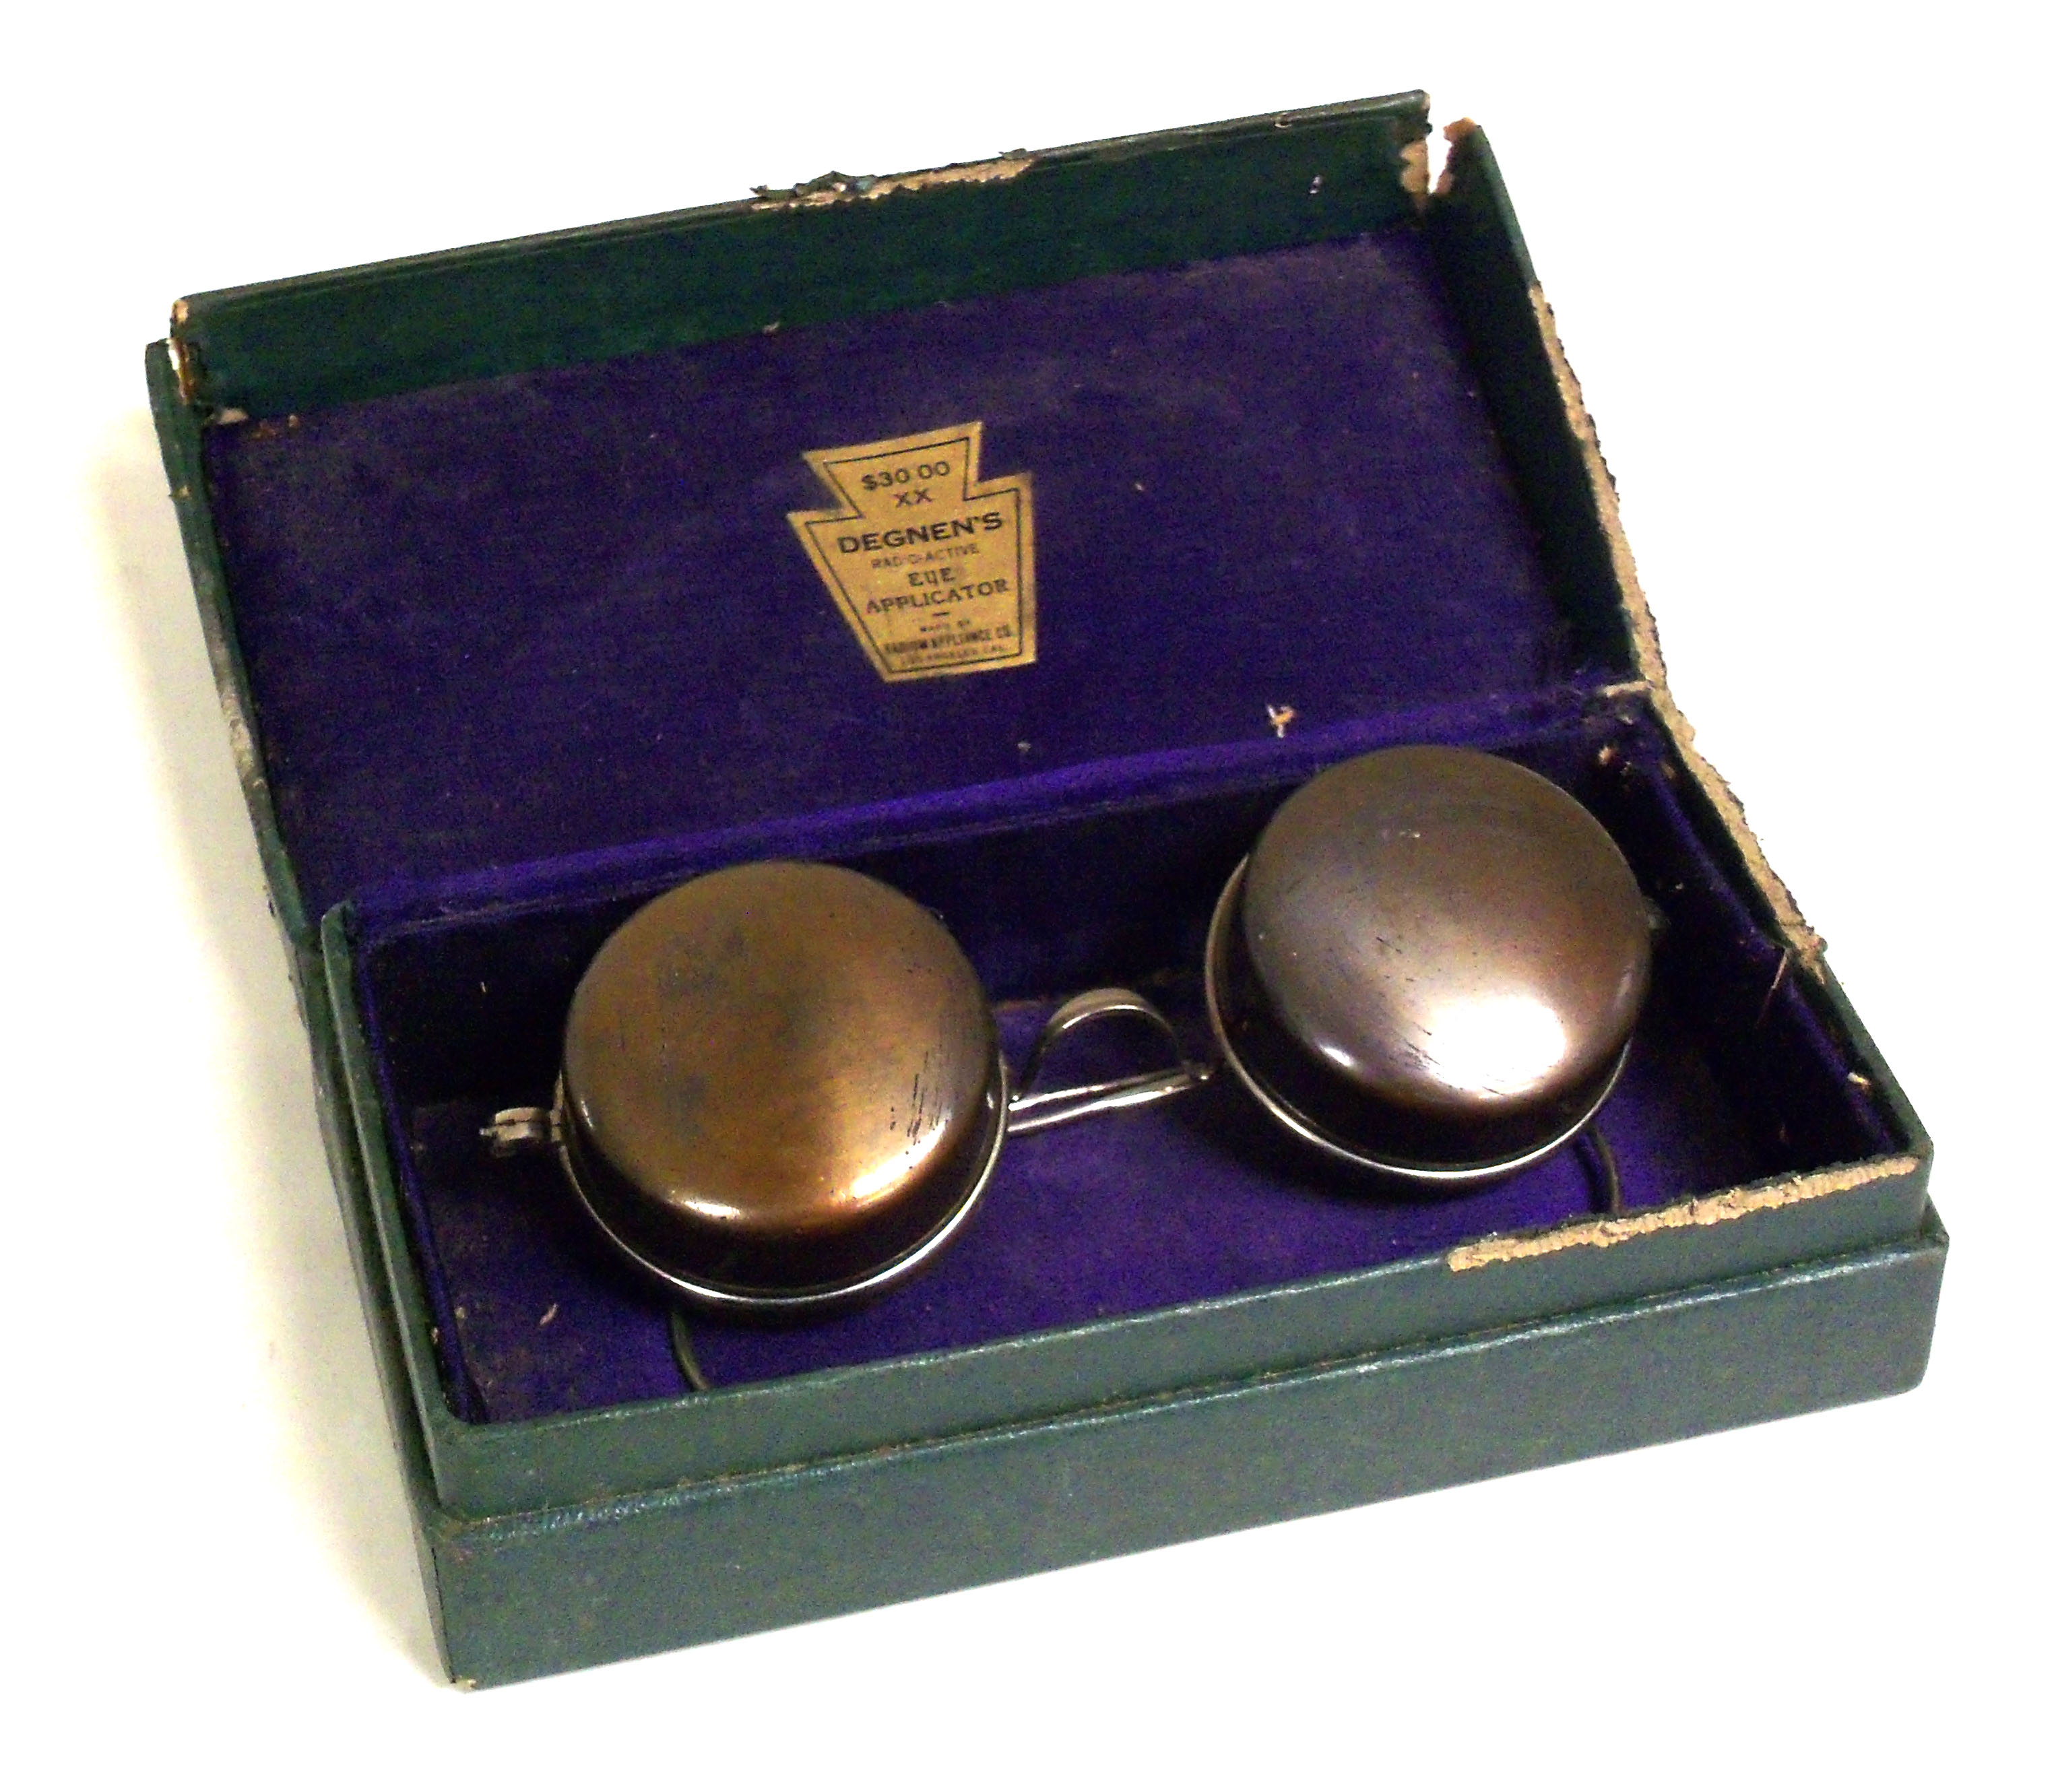 Degnen's Radio-Active Eye Applicator (1920s)